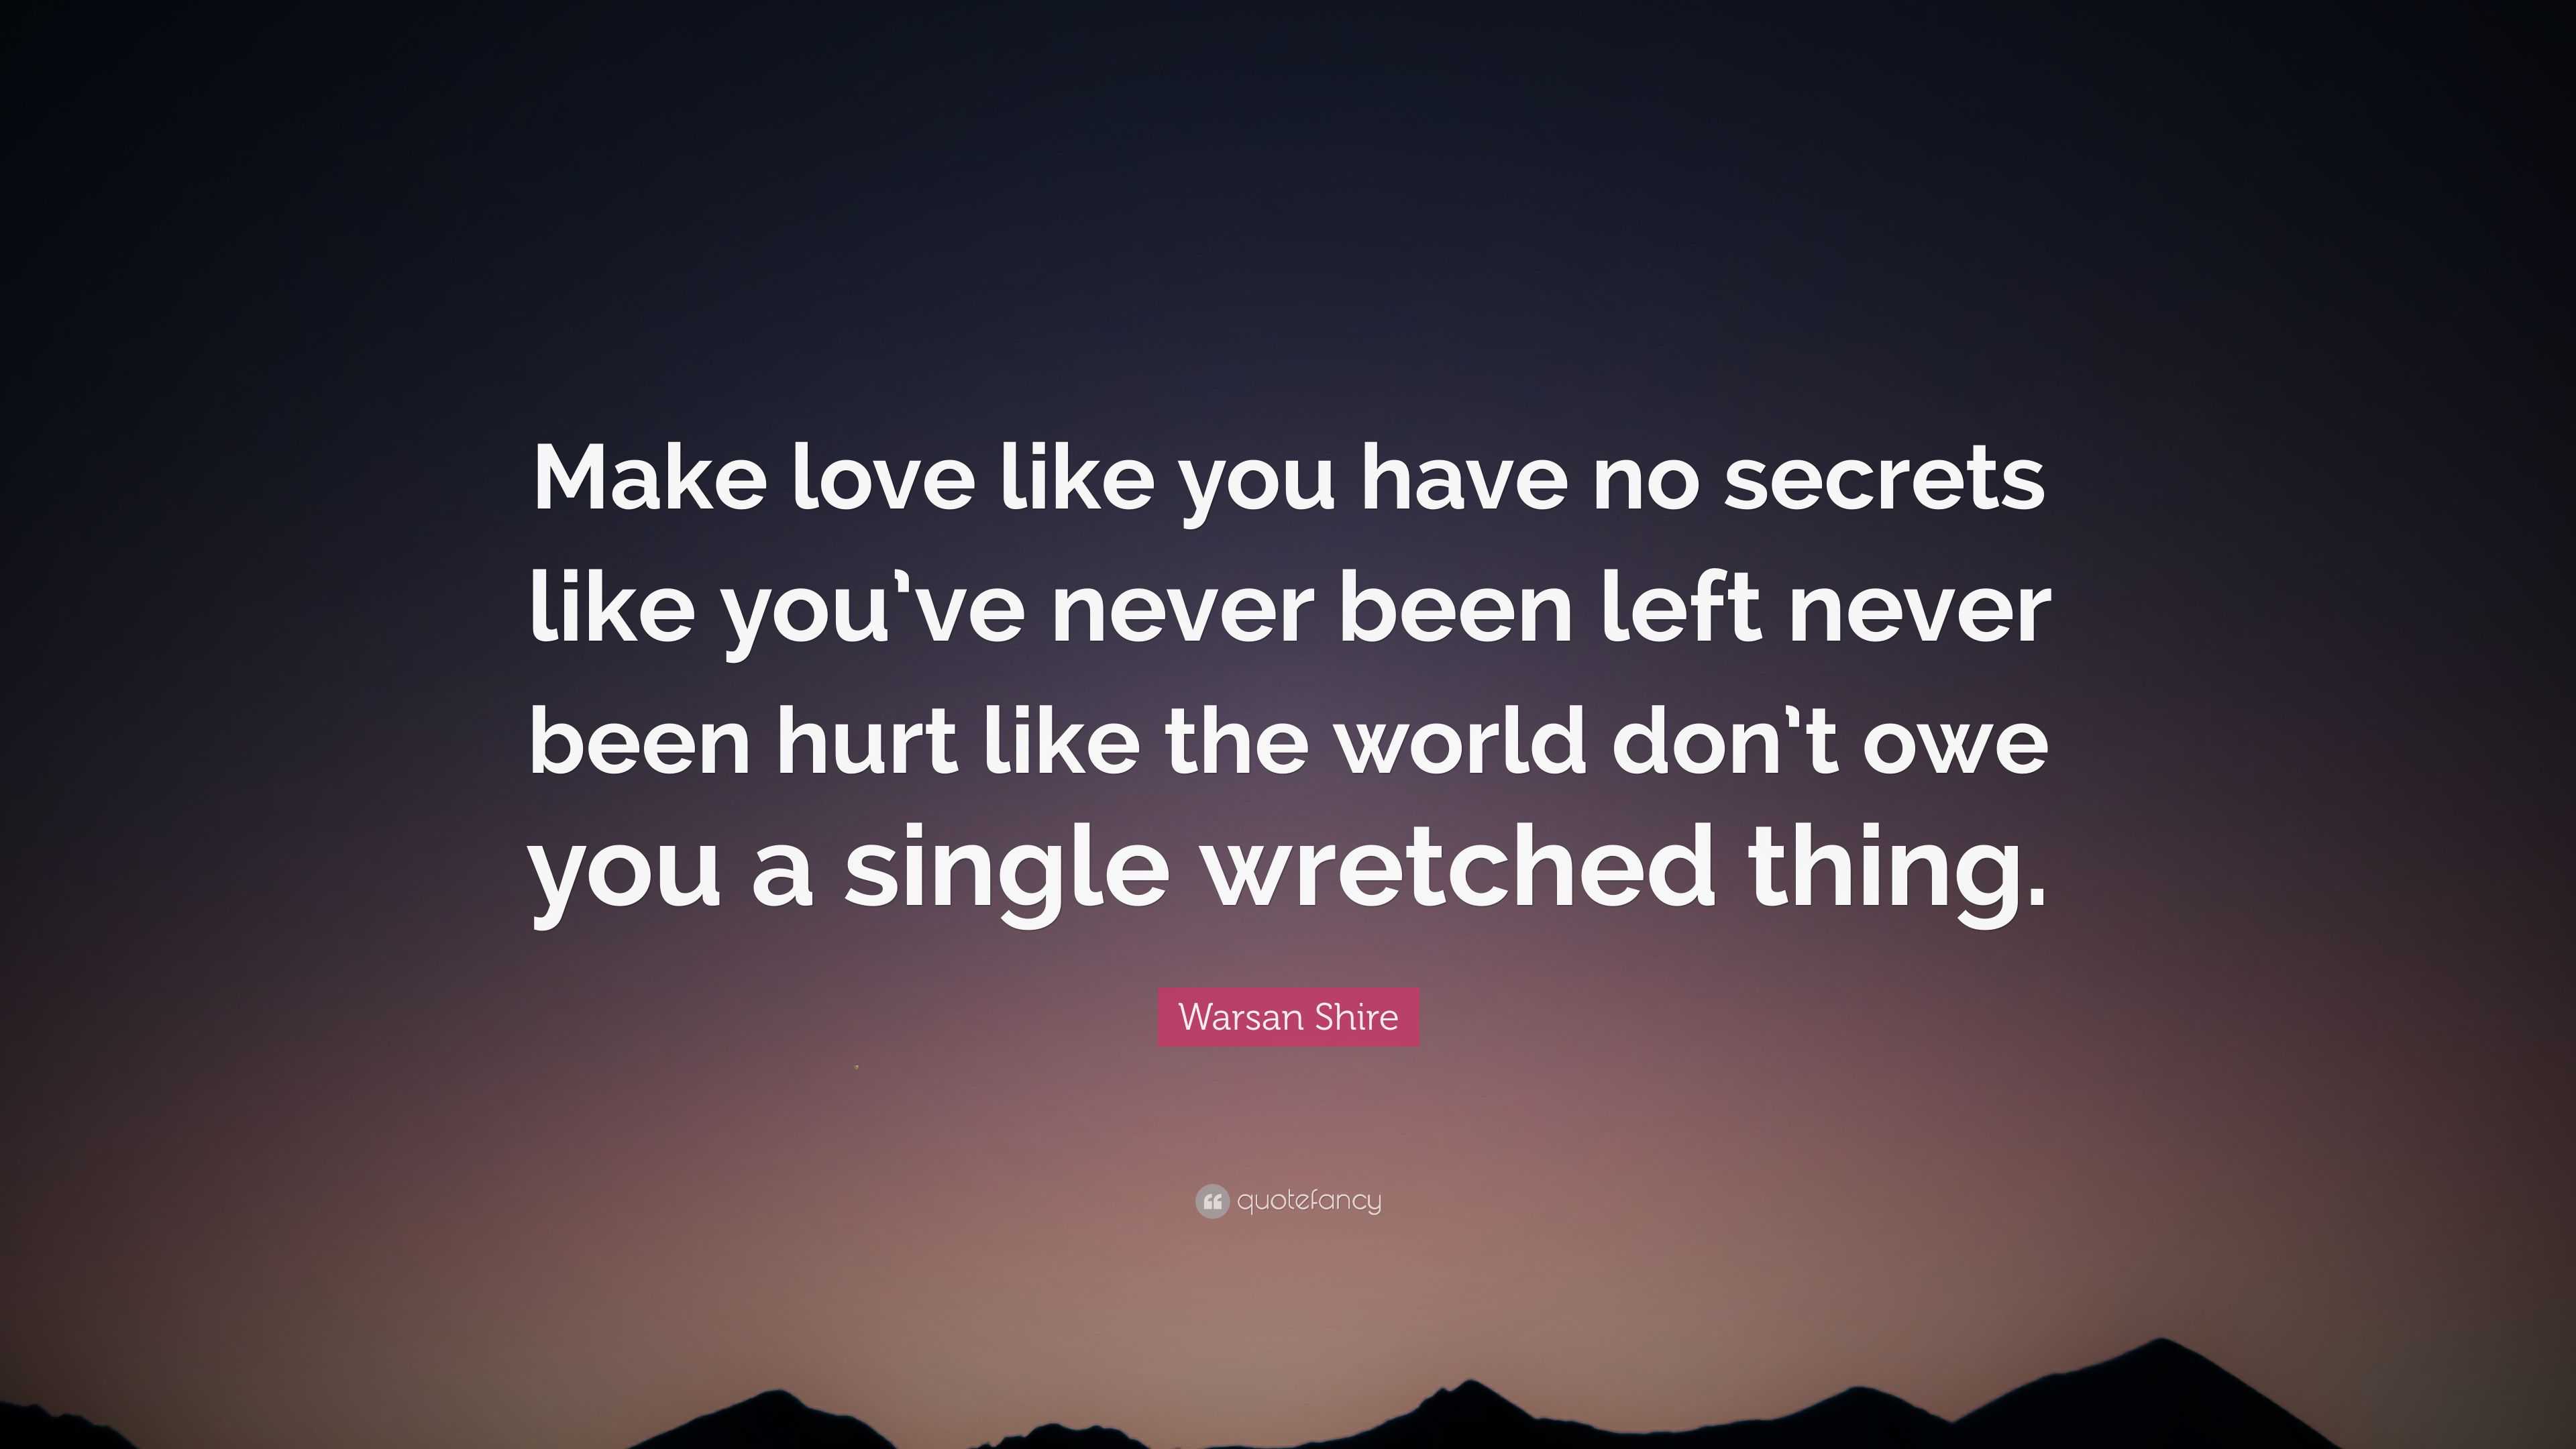 Warsan Shire Quote “Make love like you have no secrets like you ve